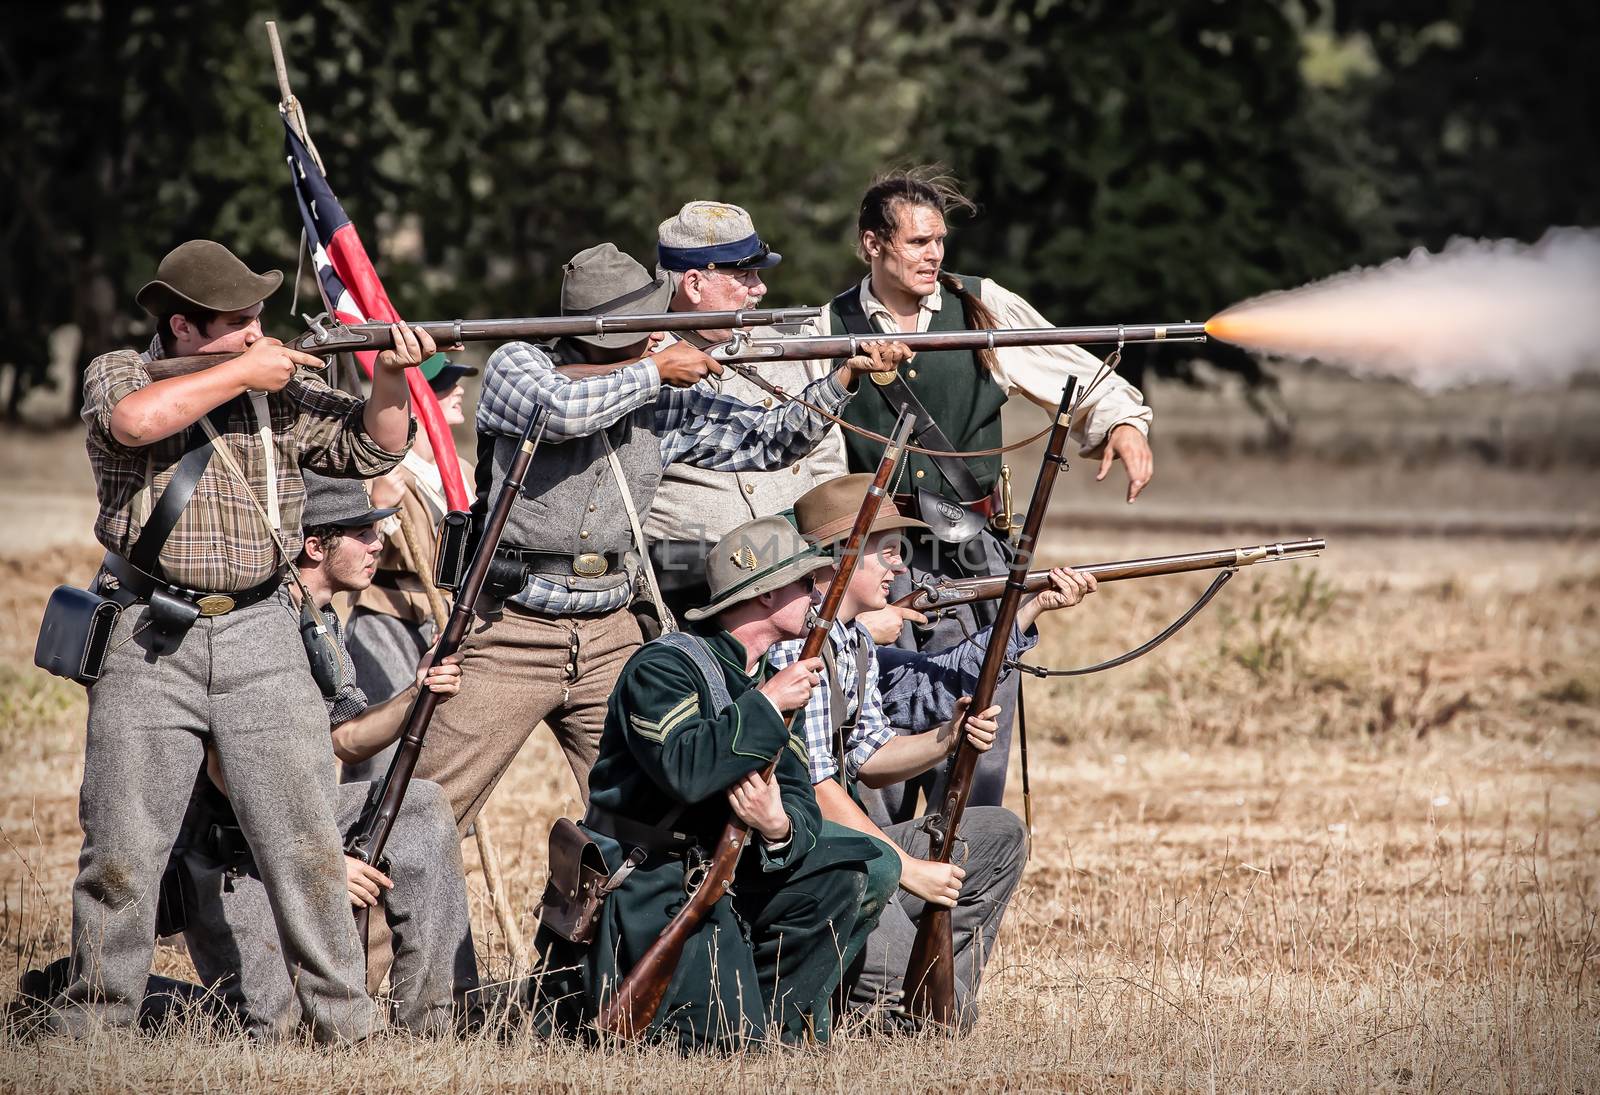 Confederates in Combat by teacherdad48@yahoo.com